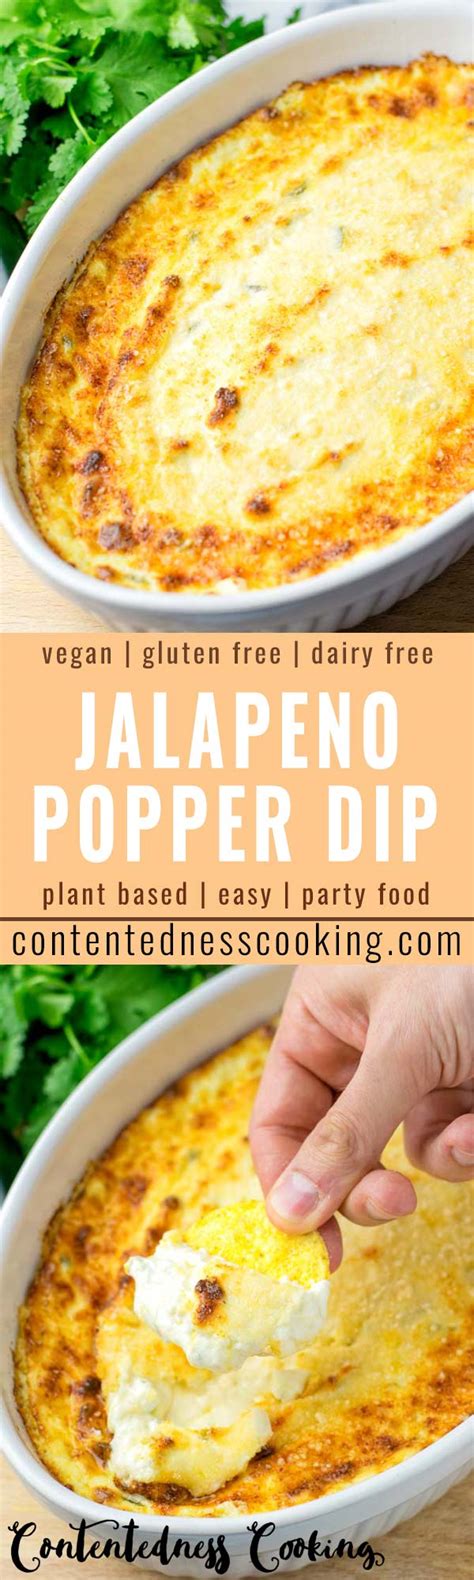 Jalapeno Popper Dip Vegan Contentedness Cooking